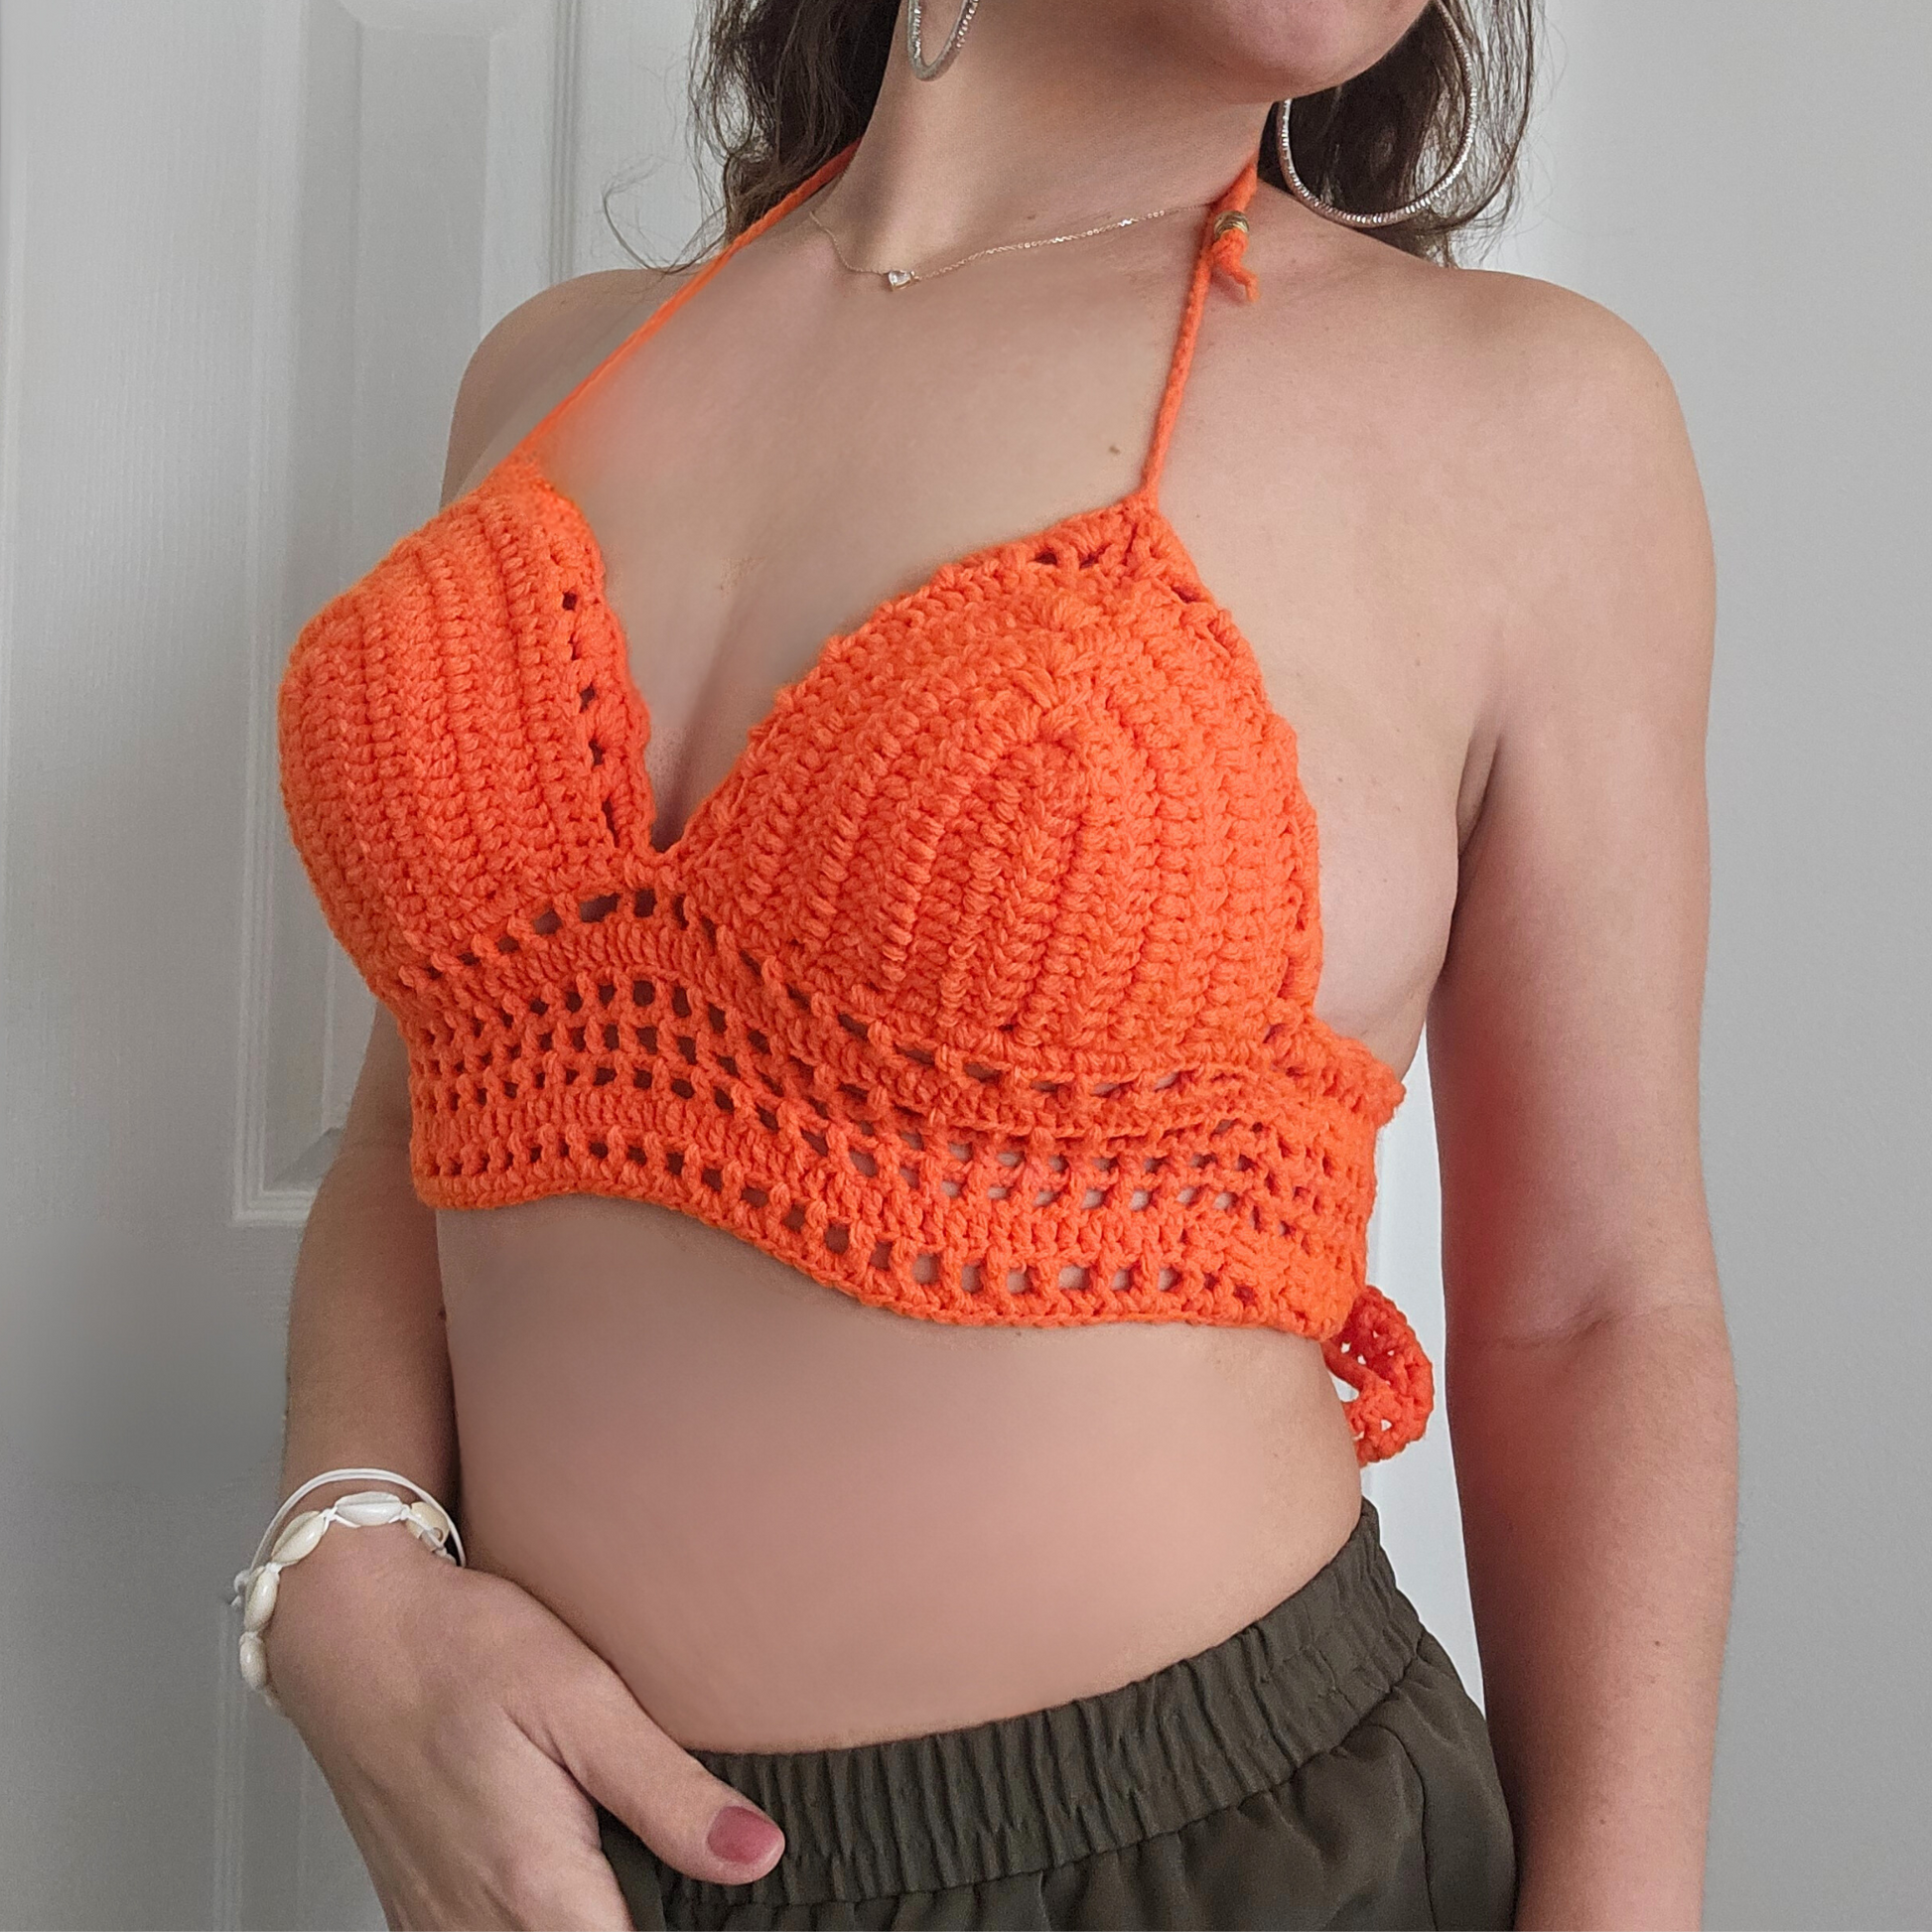 Orange Crochet Cropped Top model posing